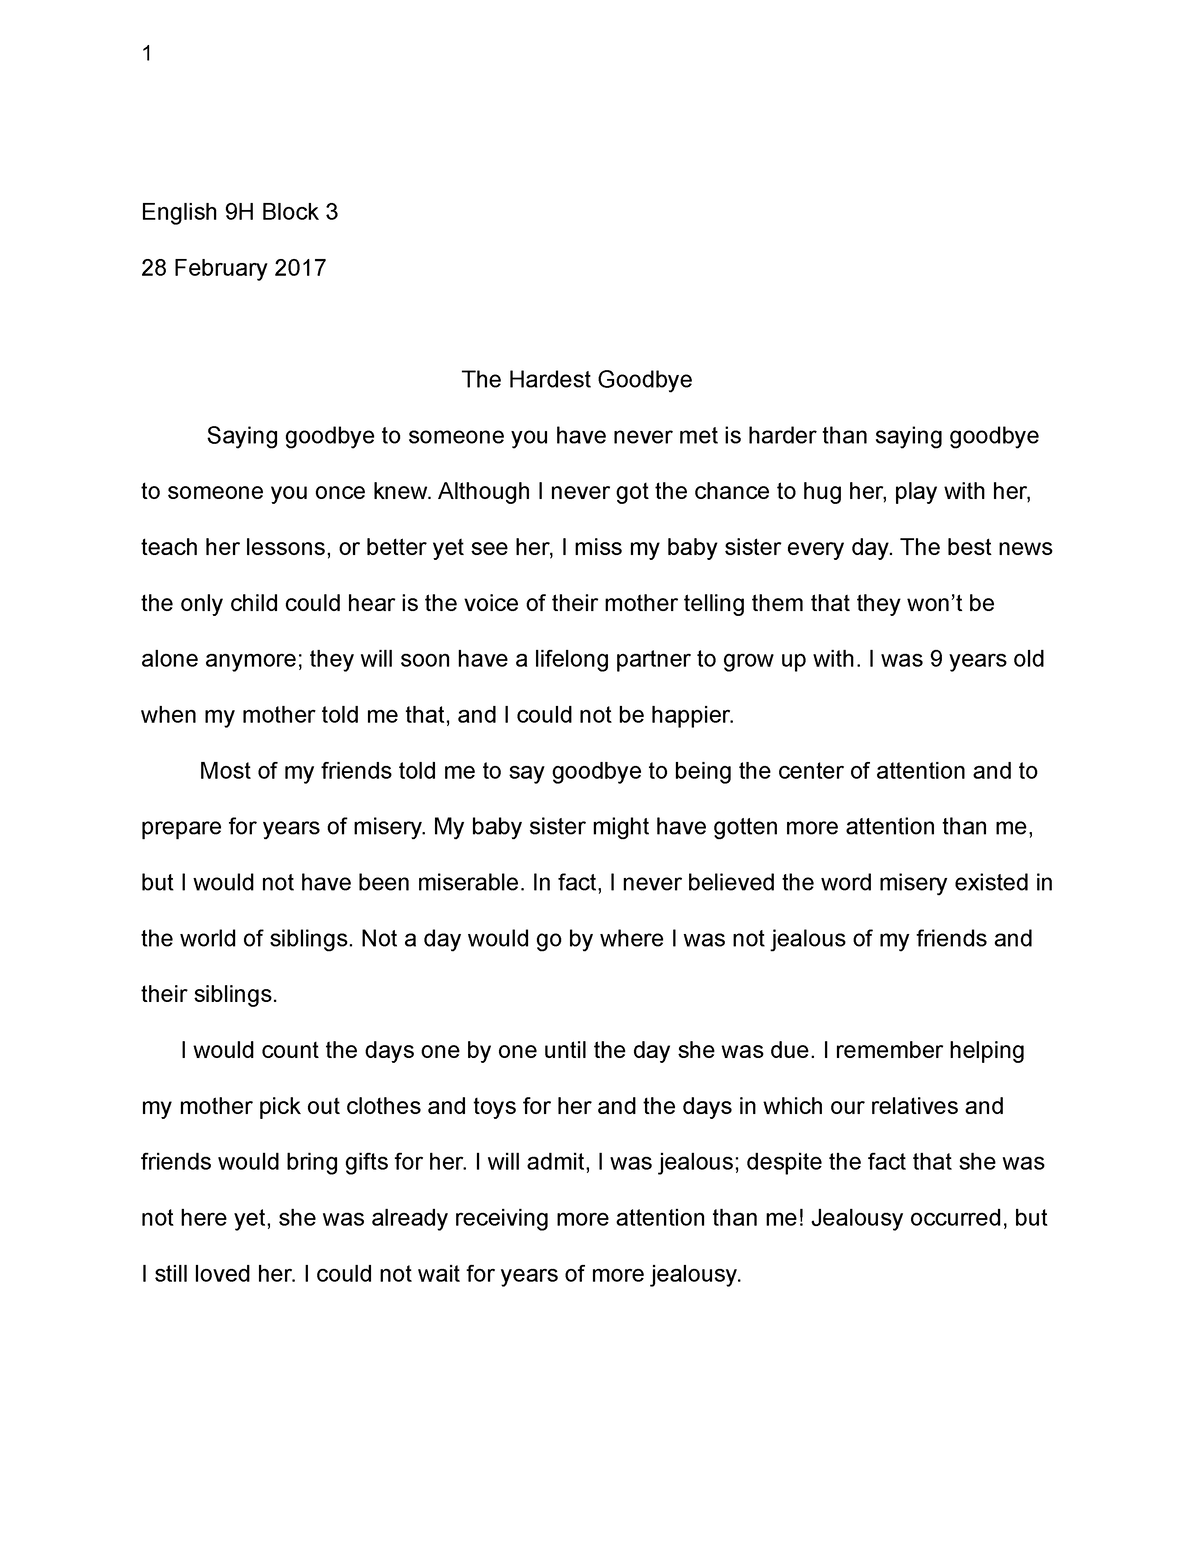 the hardest goodbye essay introduction